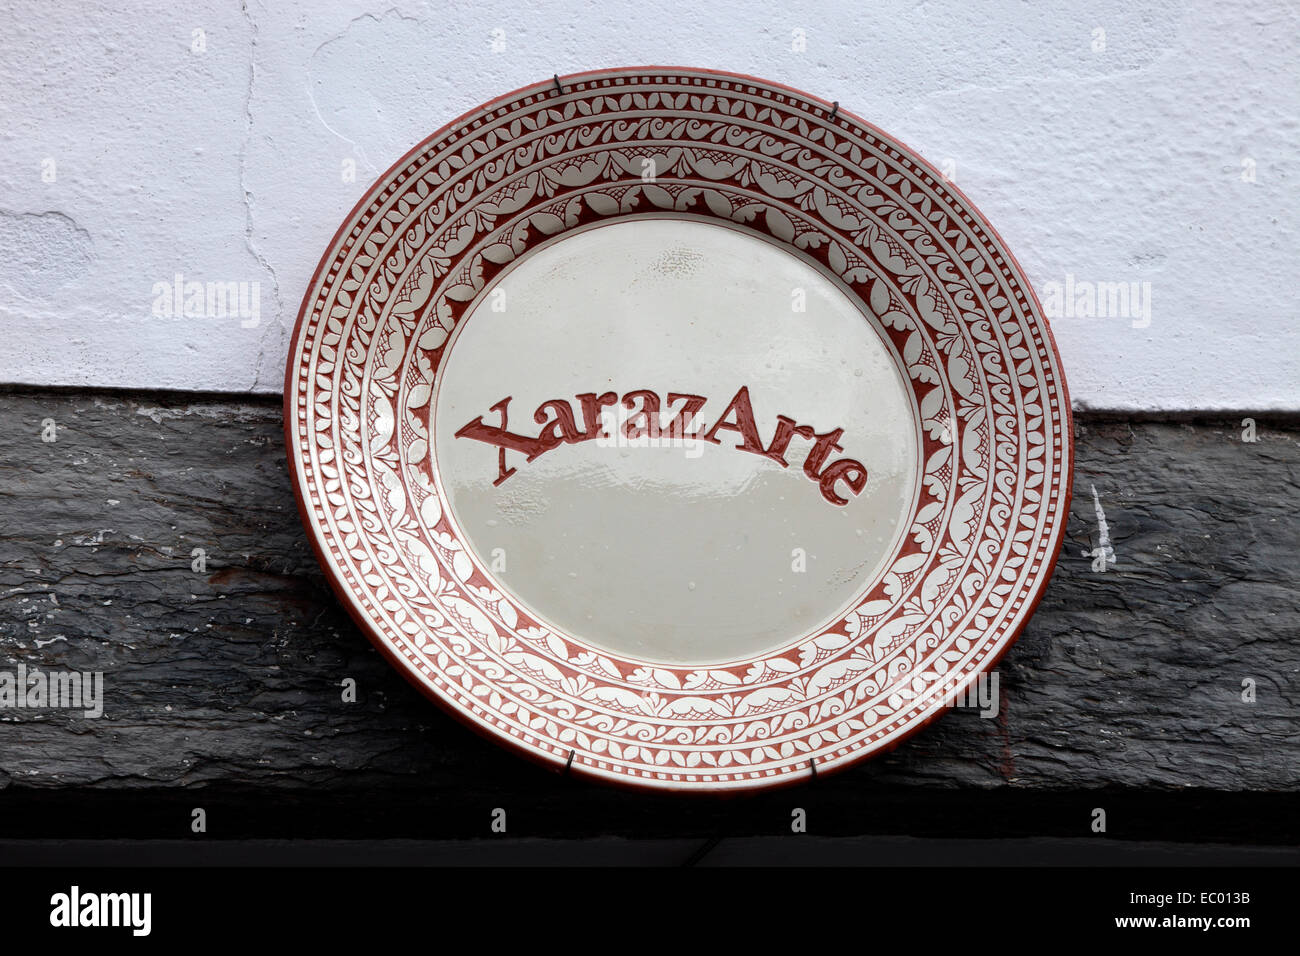 Sign for Xaraz Arte, a ceramics studio in Mosaraz. Stock Photo